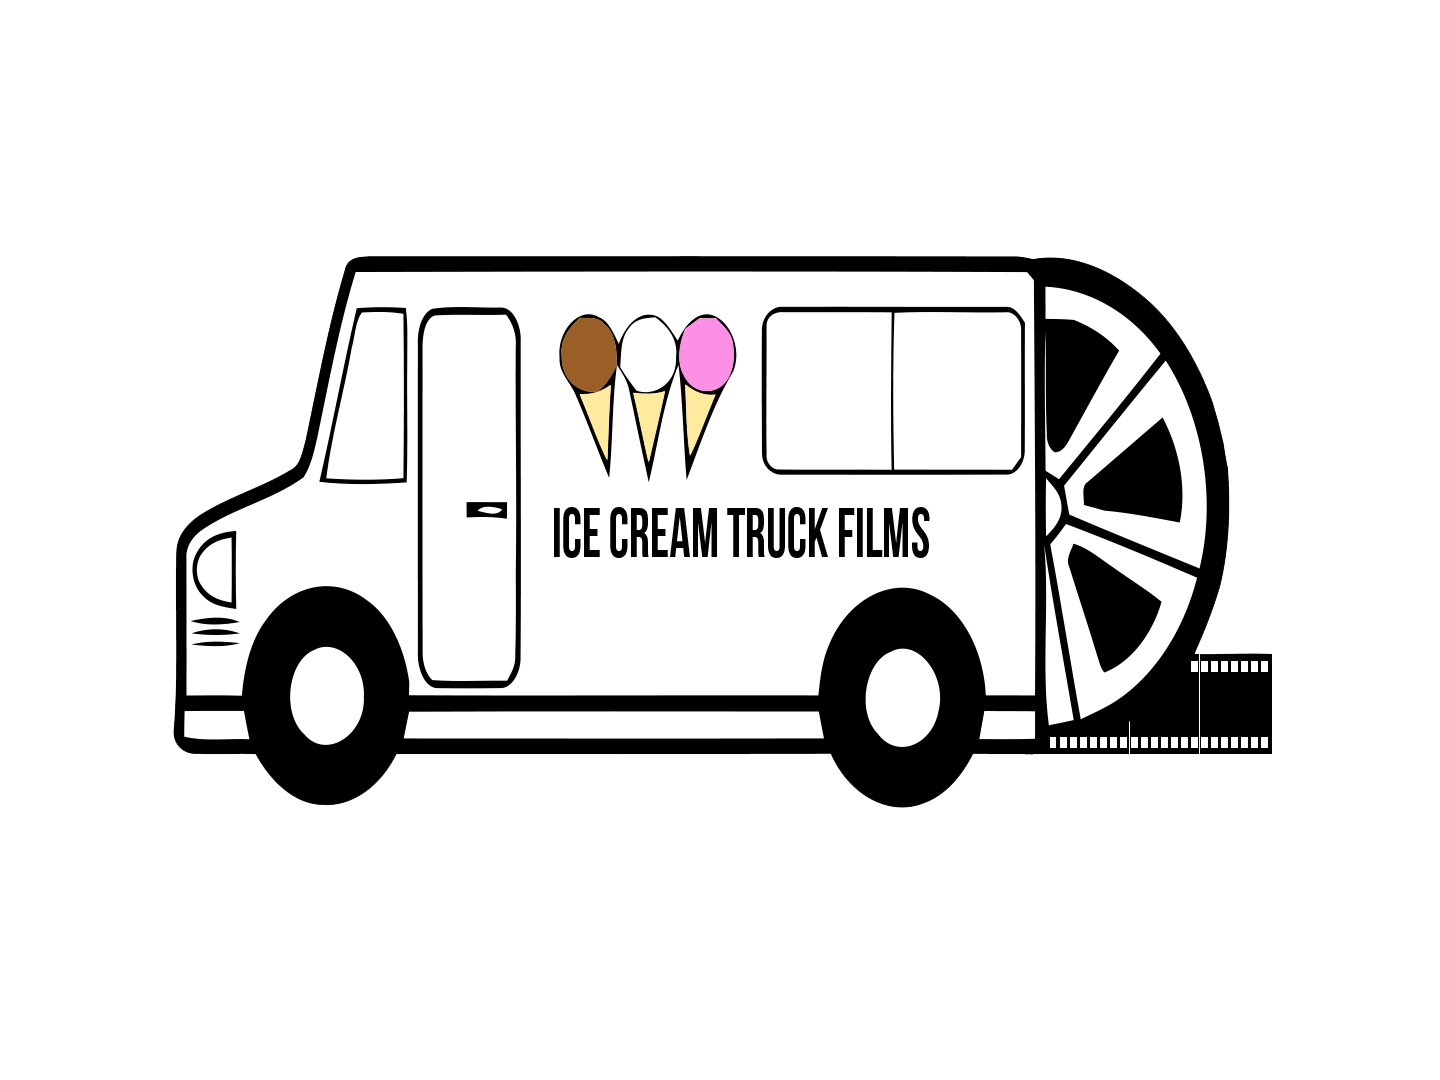 Ice Cream Truck Films